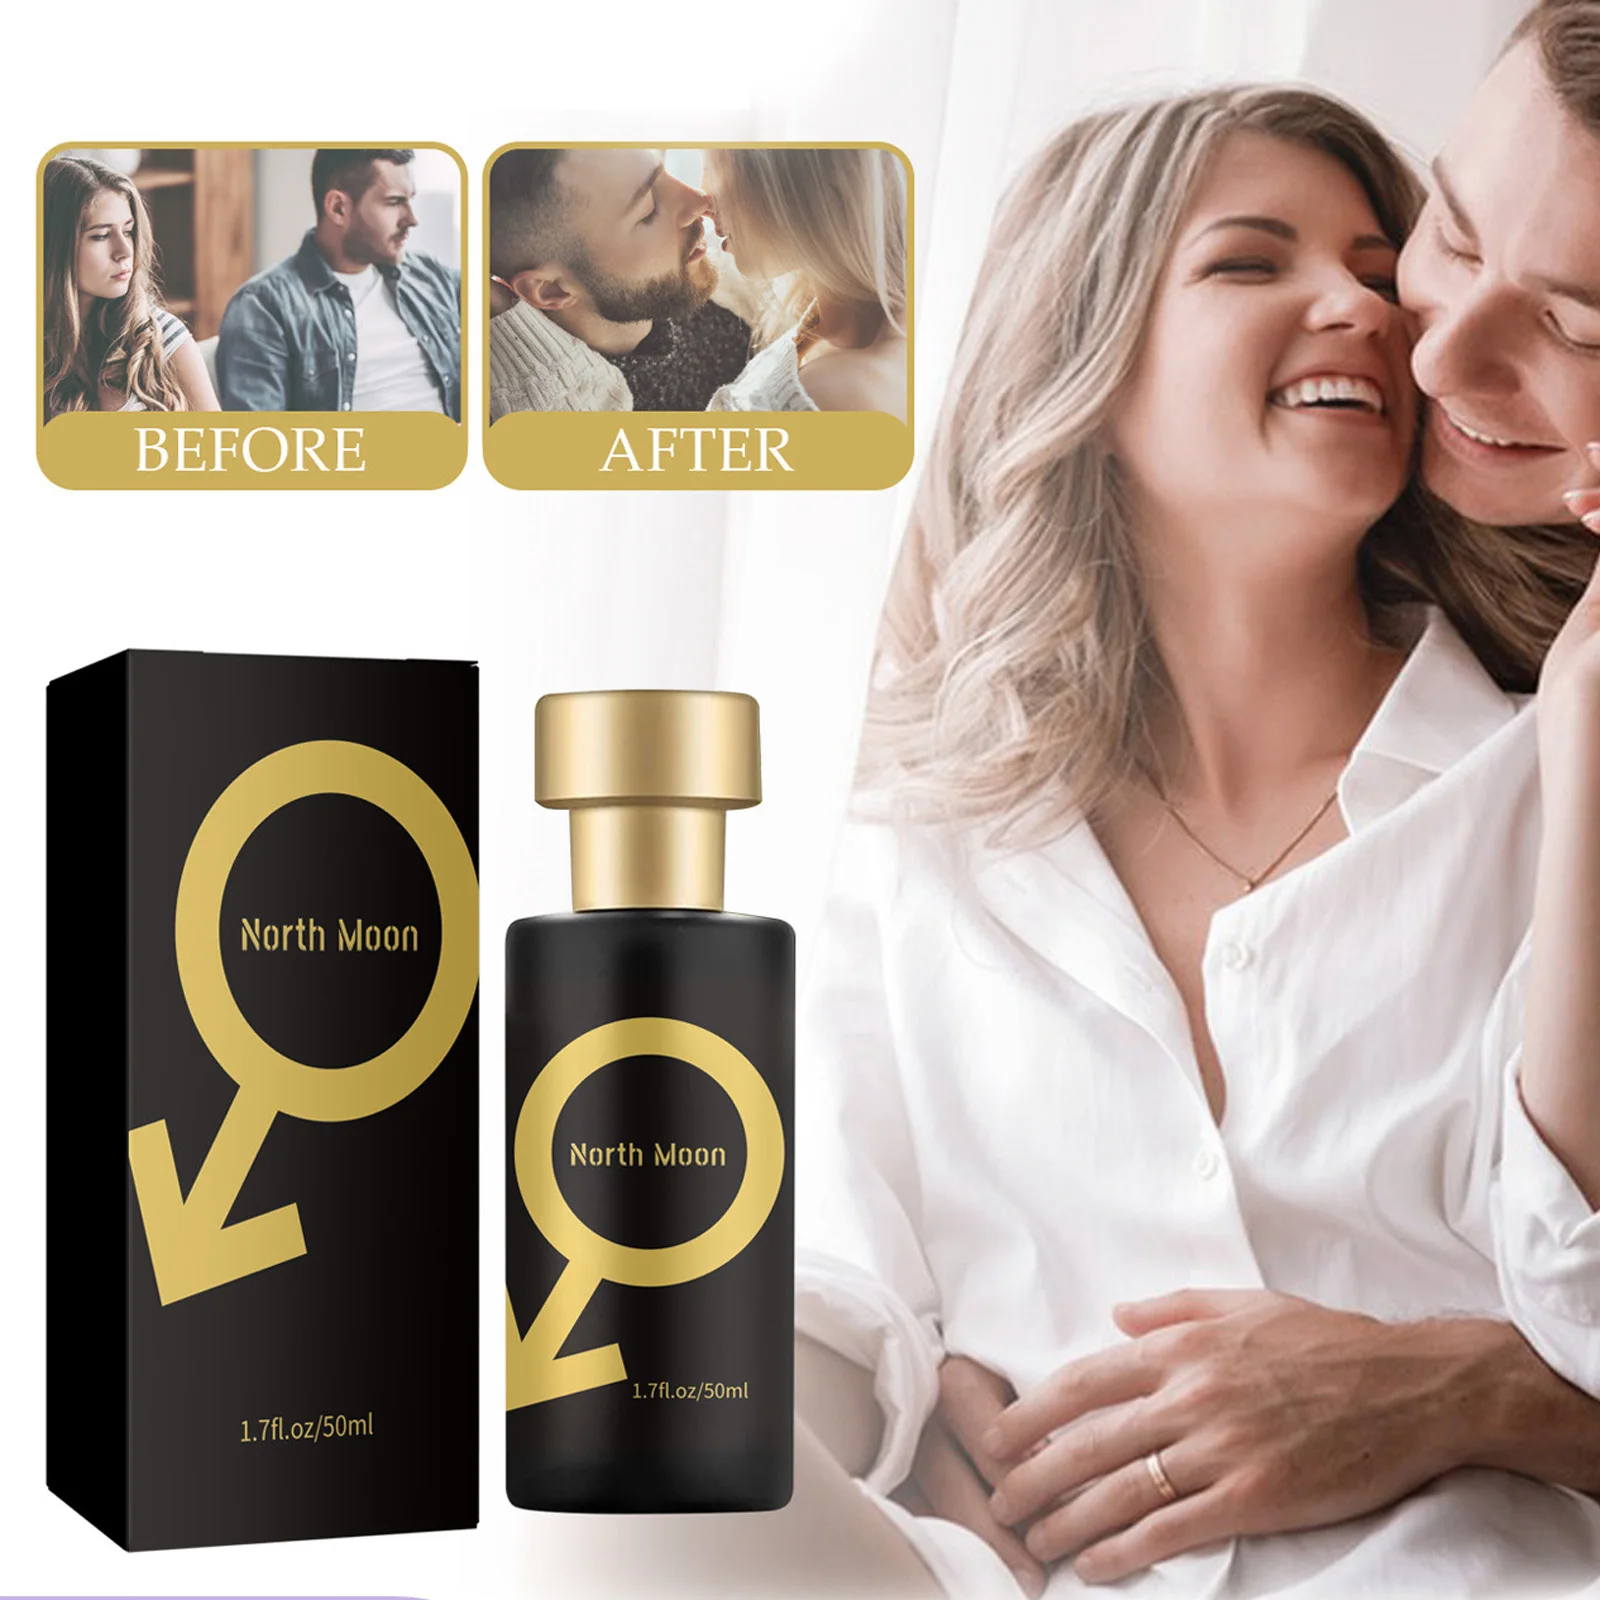 50ml Attractive Feminino Perfume for Men Women Fresh Lasting Perfumes Masculinos Originais Importados Lovers Product 성인용퓸 3pcs